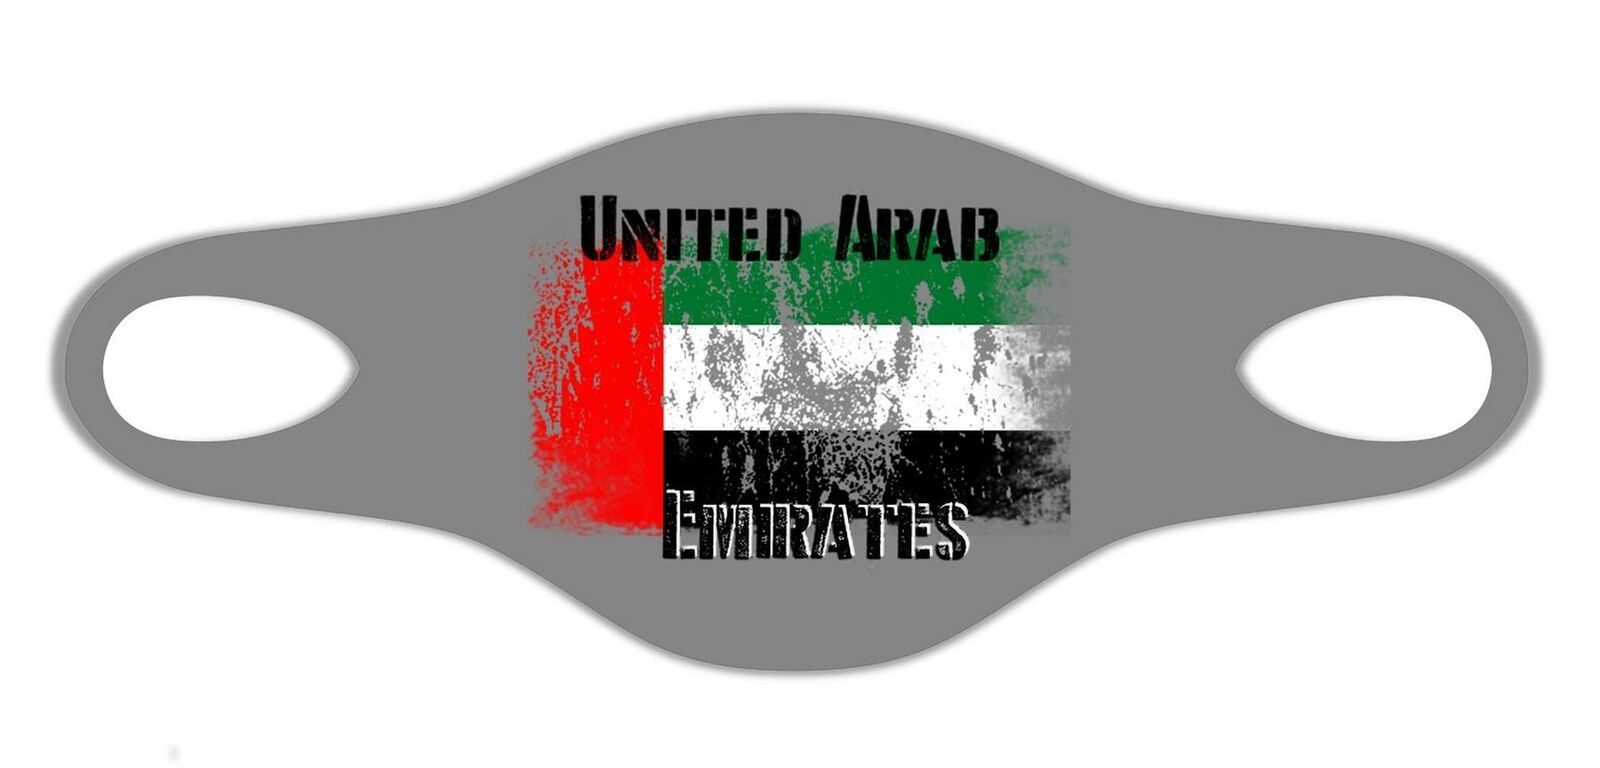 United Arab Emirates National Flag Face Mask Protective Reusable washable Breath